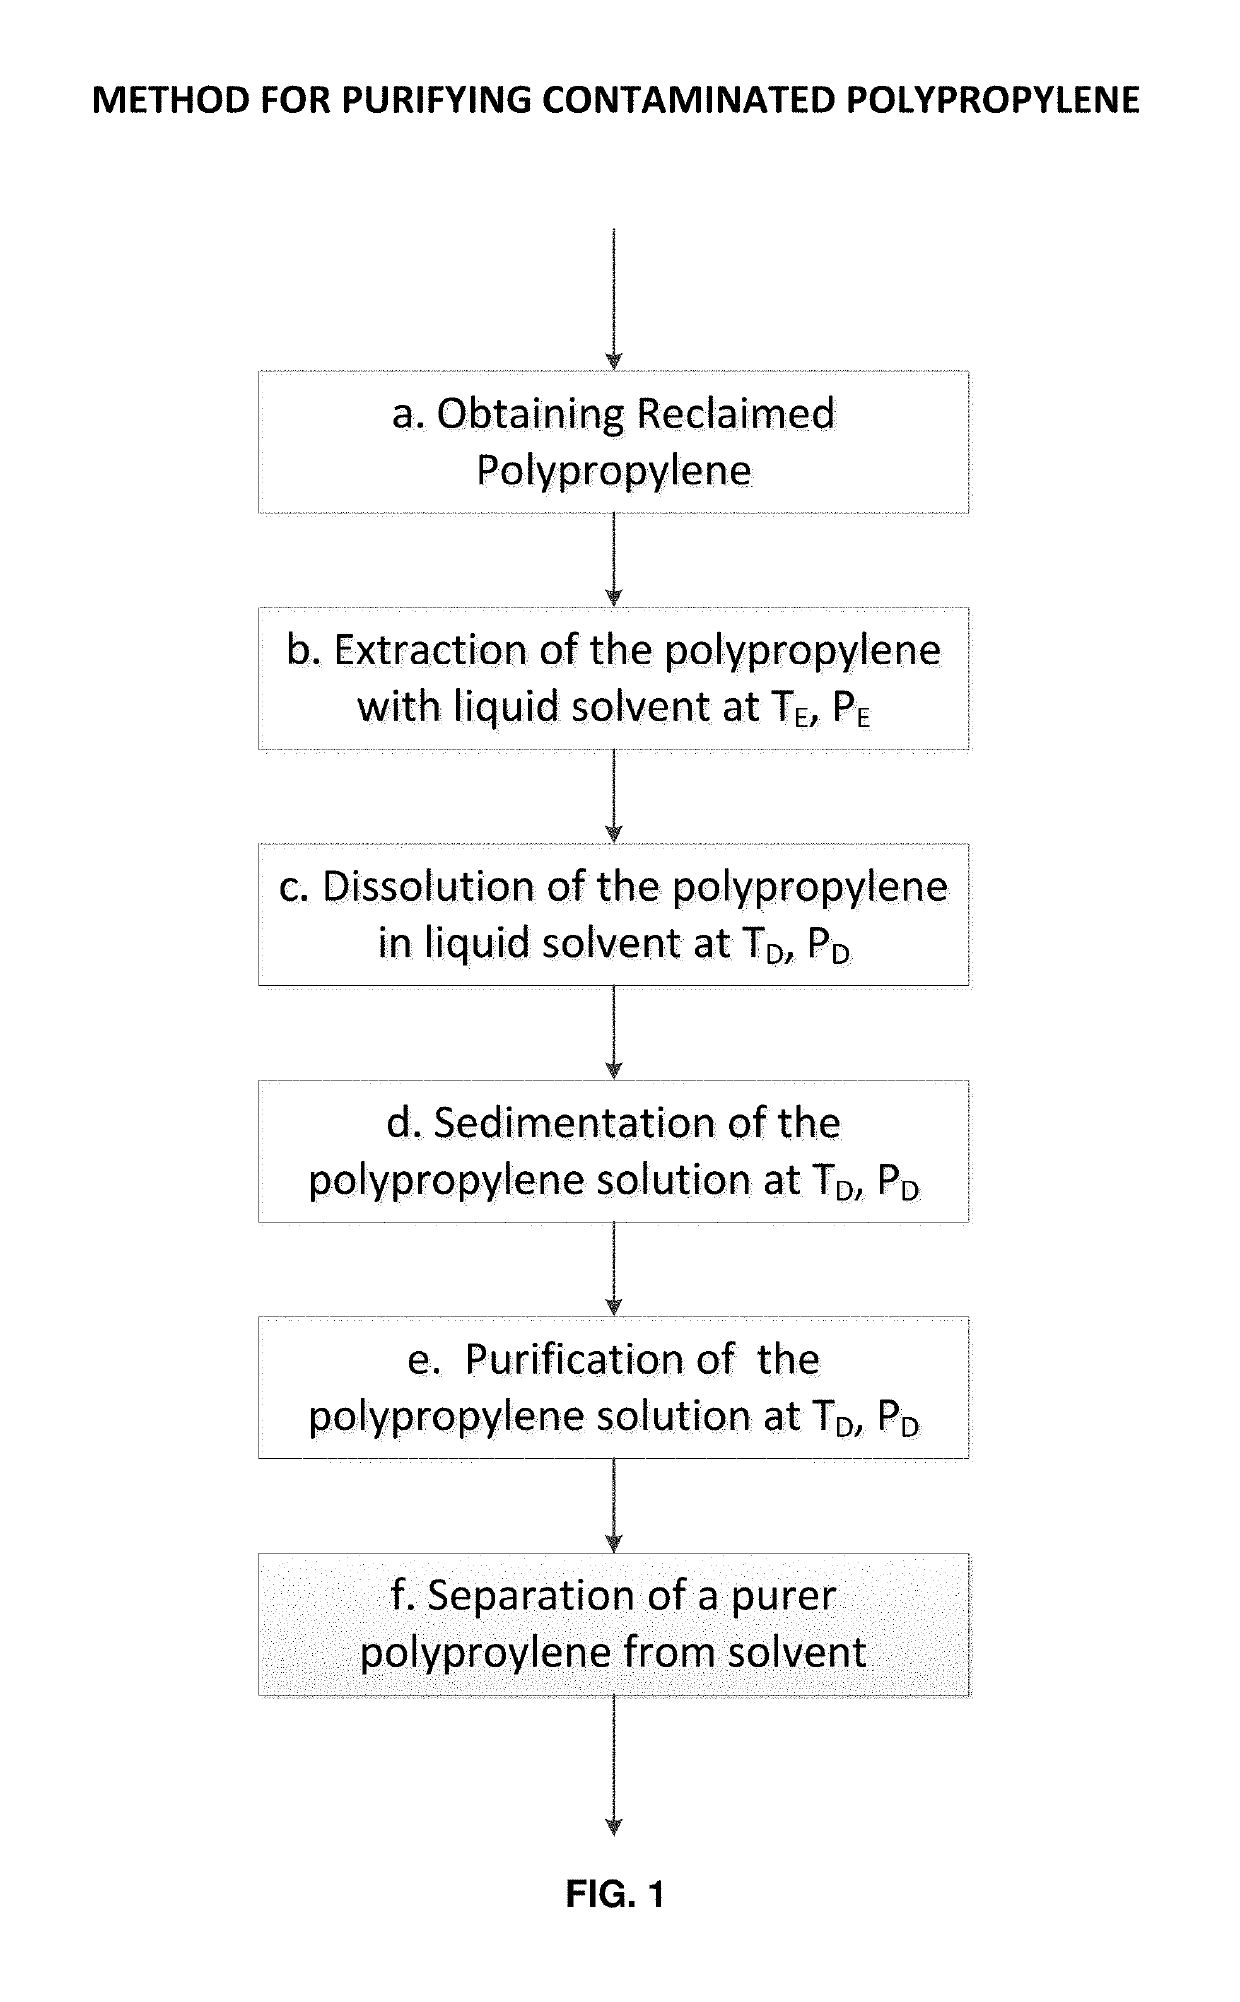 Method for purifying reclaimed polypropylene